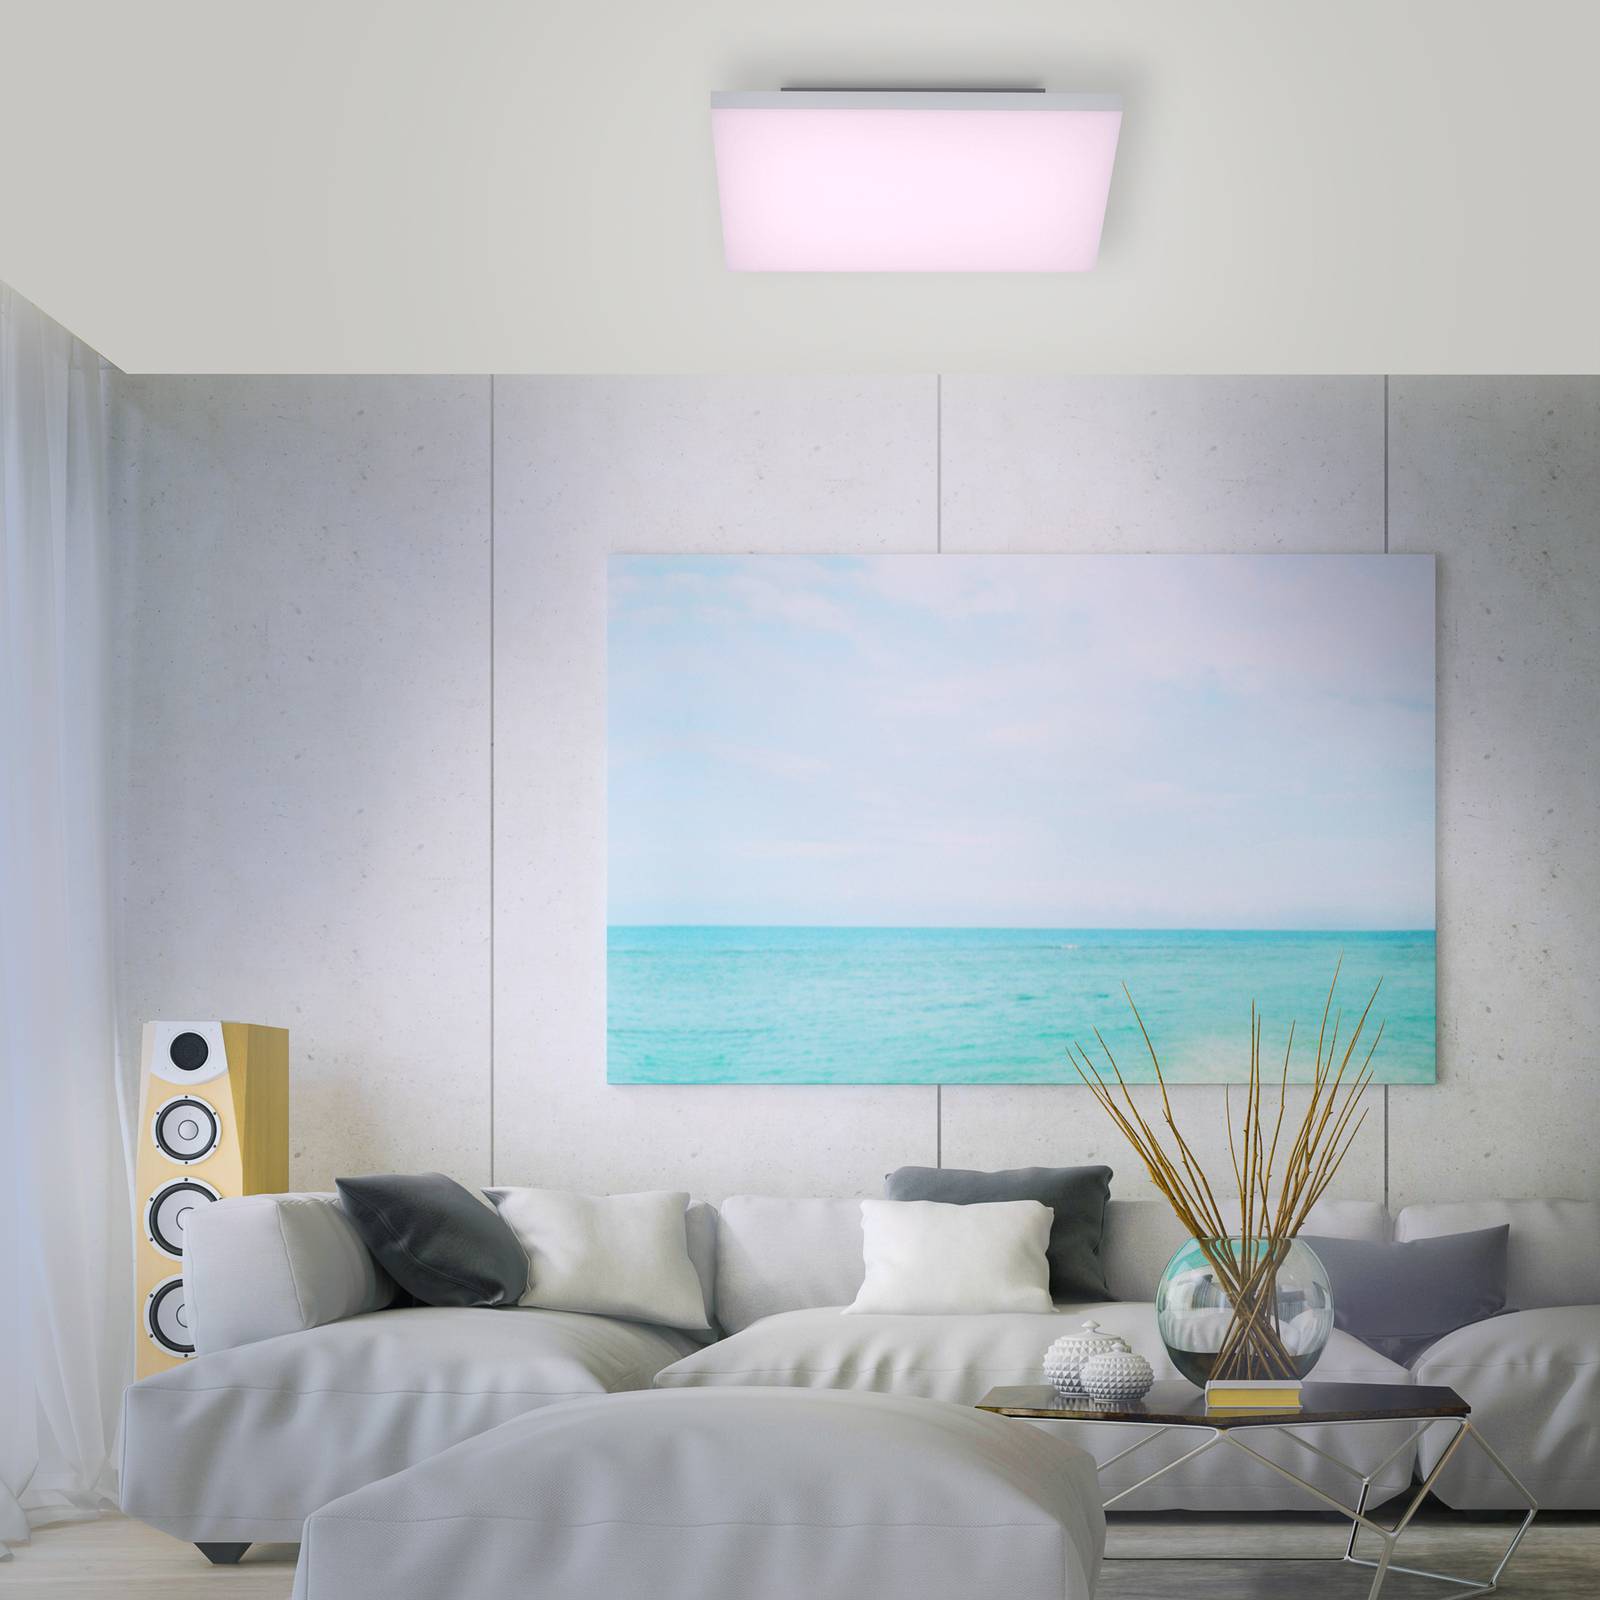 Image of Q-Smart-Home Paul Neuhaus Q-FRAMELESS plafonnier RGBW 45x45 cm 4012248322741